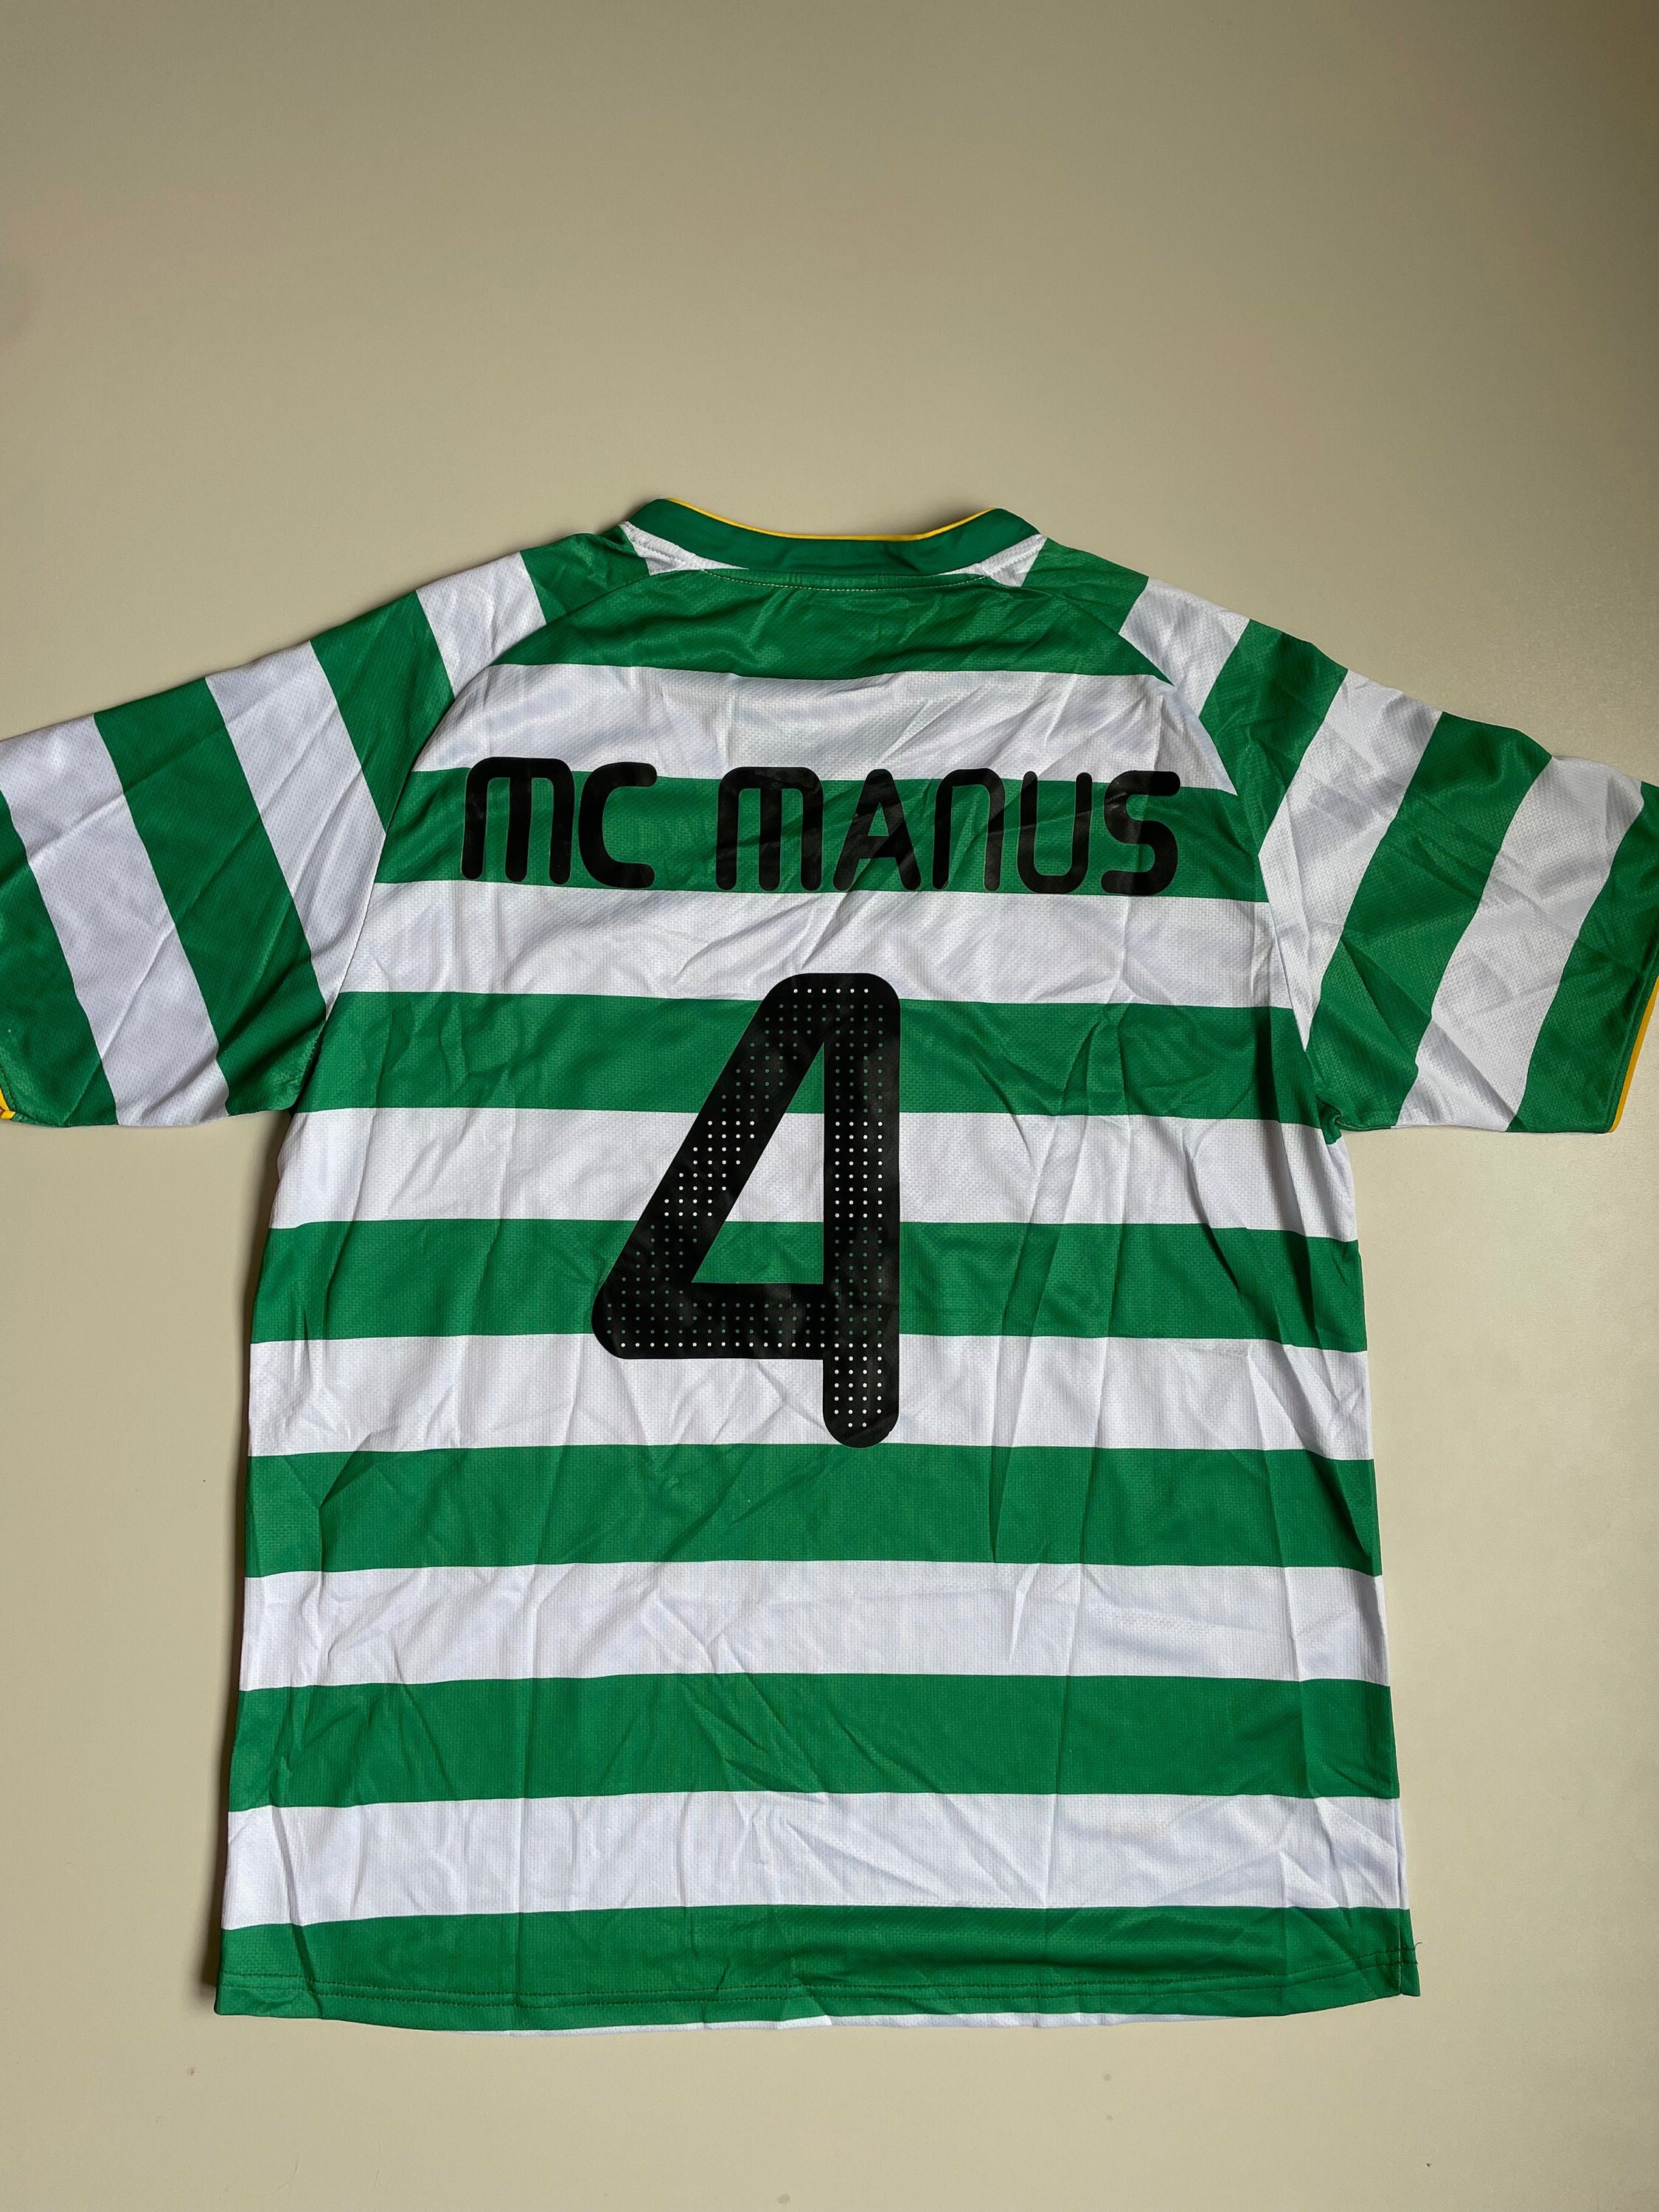 Football teams shirt and kits fan: Celtic FC 2008-10 home kits